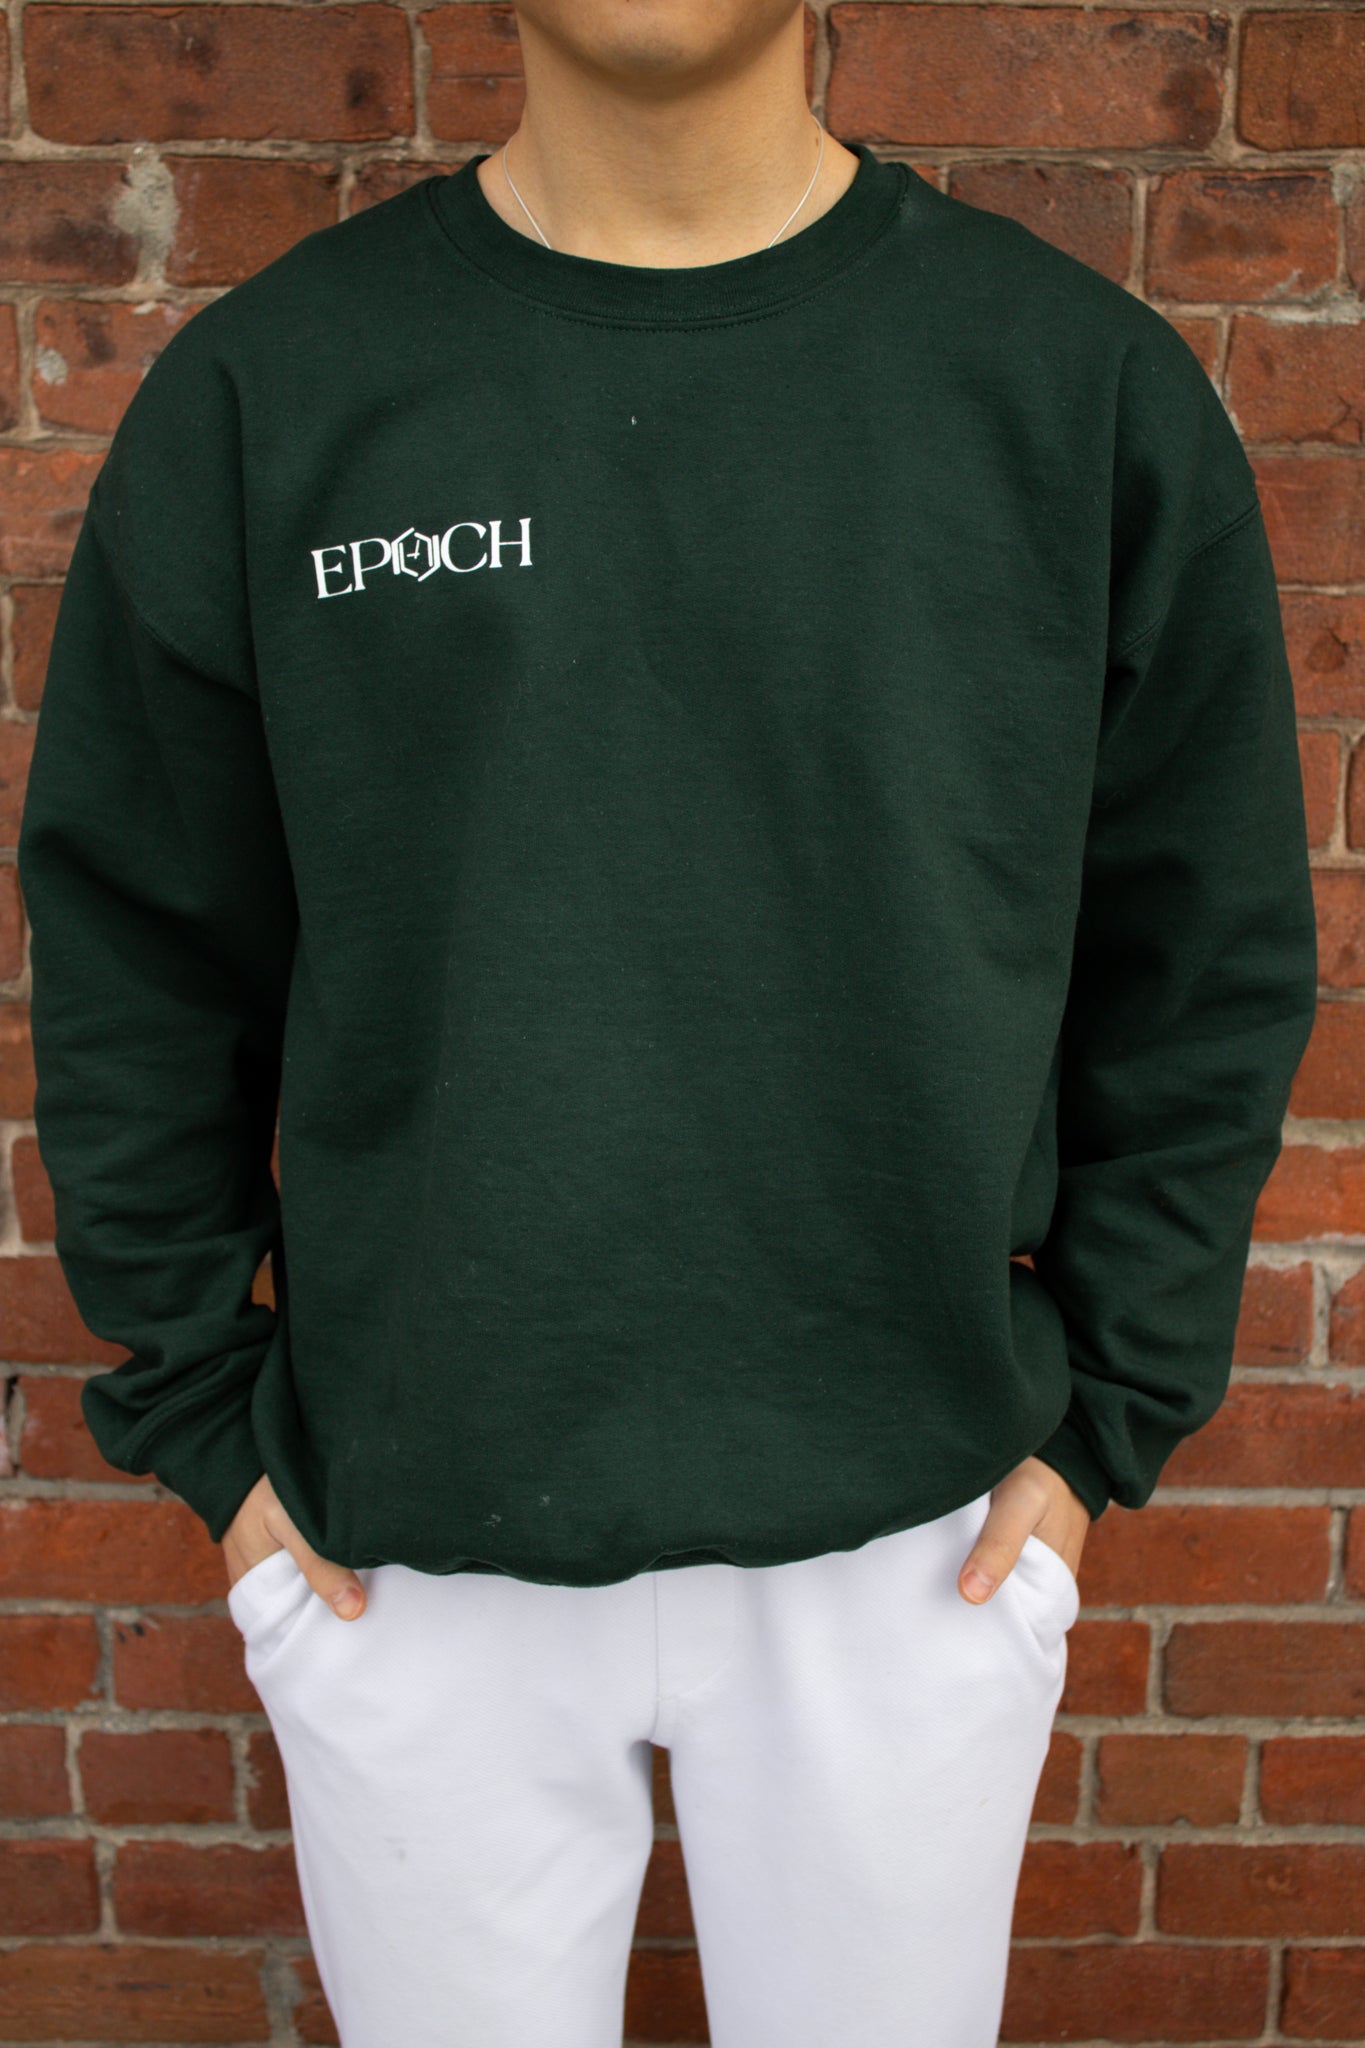 Epoch Crewneck Sweater